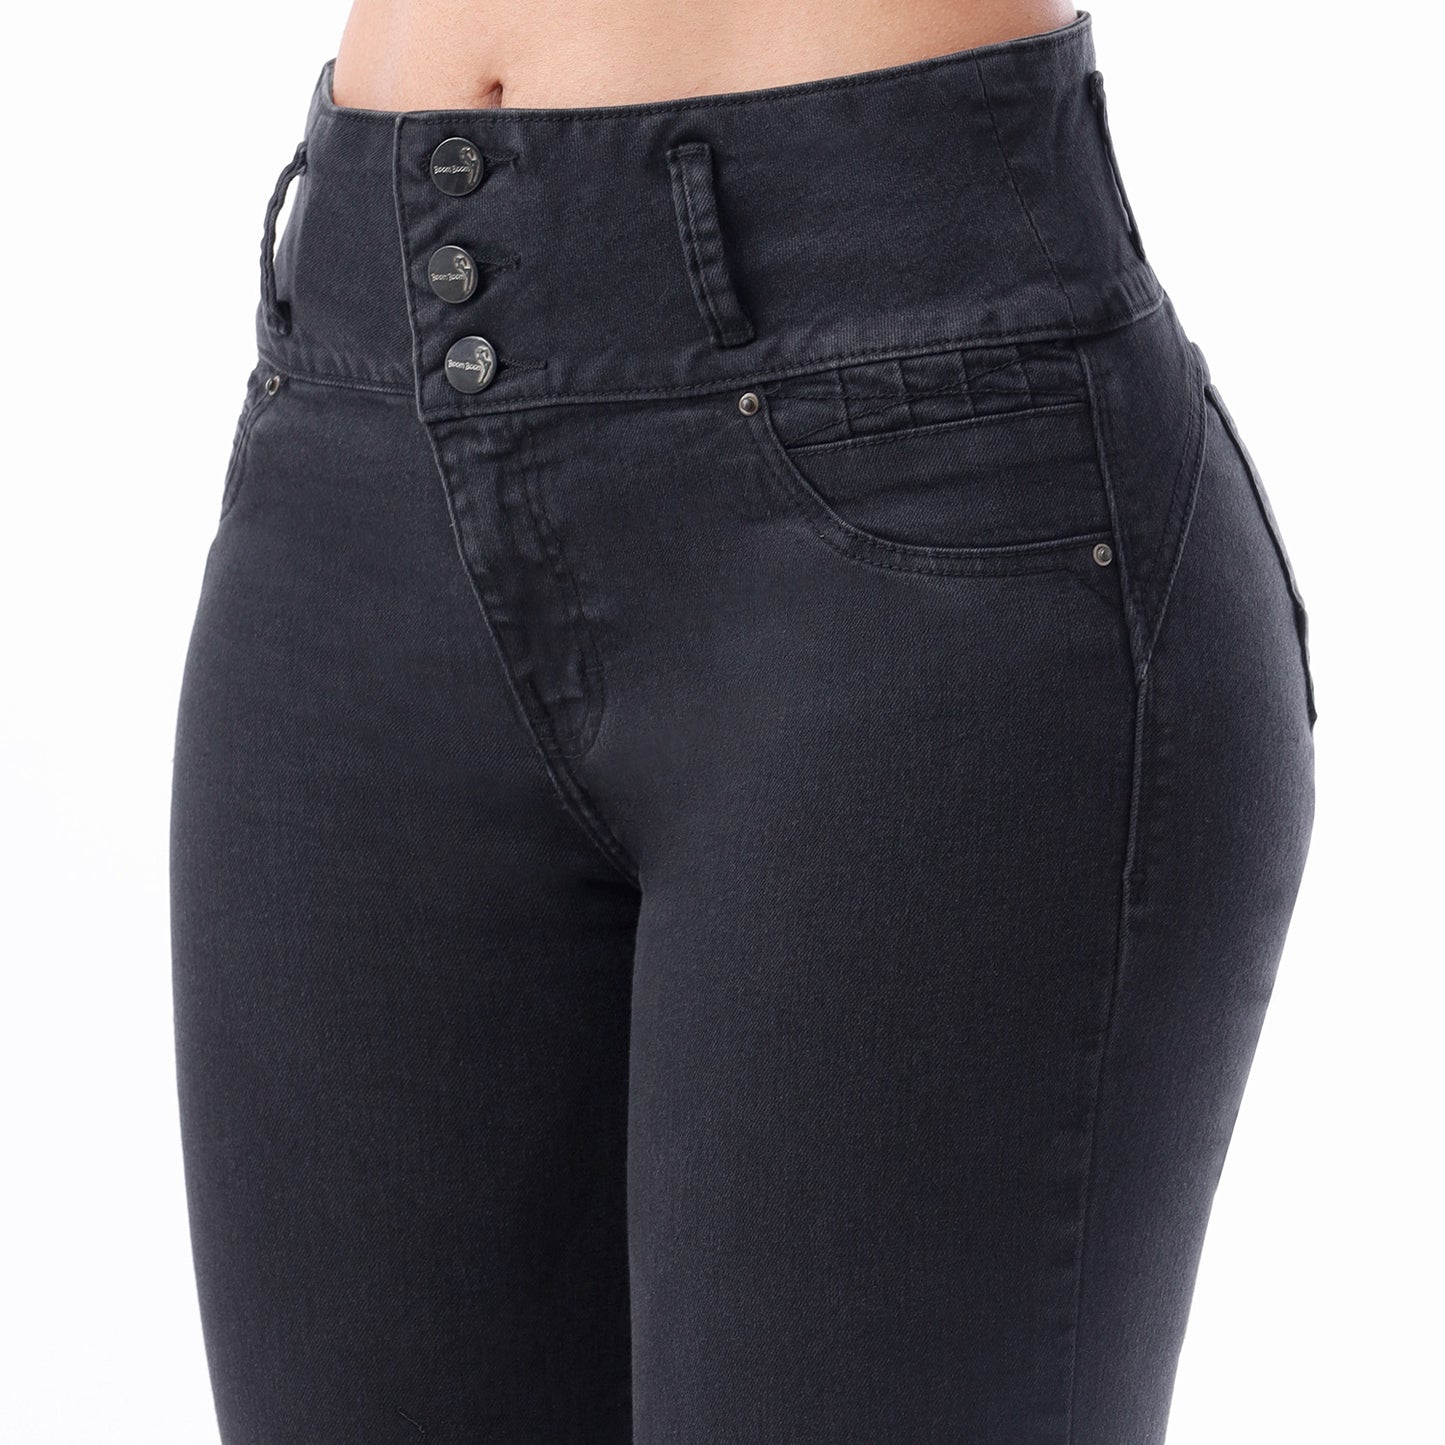 Jeans Push Up Mujer Semimoda Semi Recto Cintura Carbón – 220664